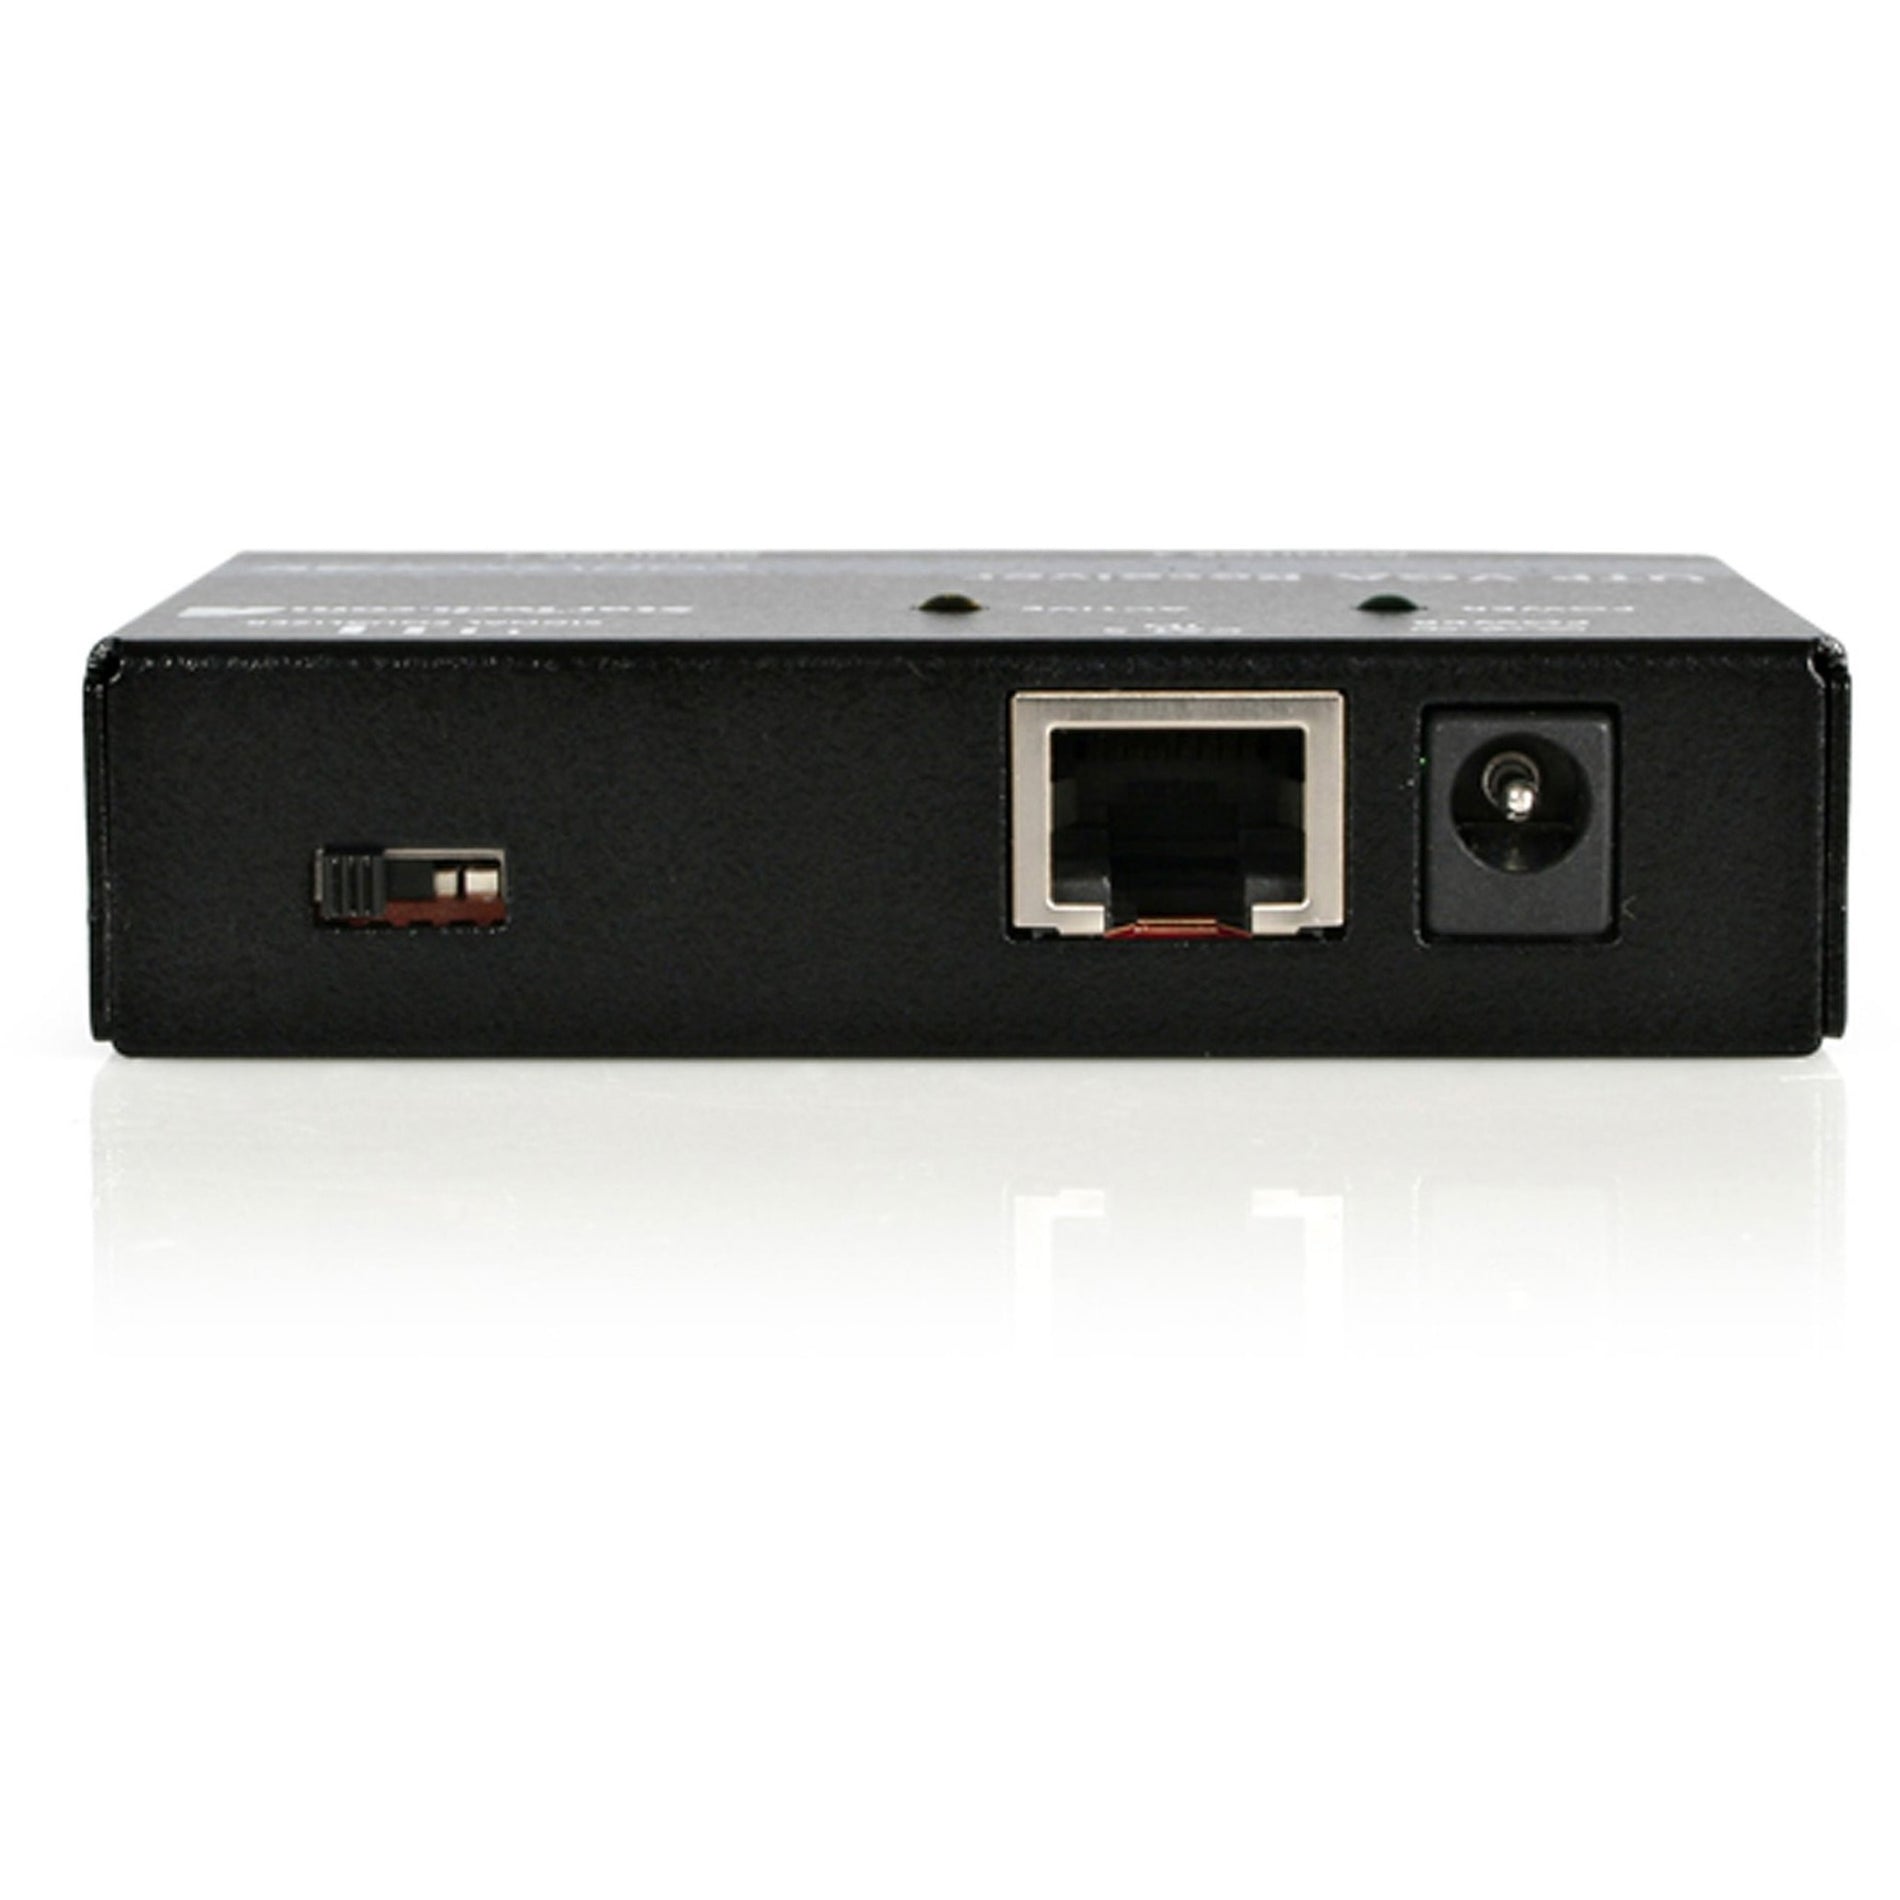 StarTech.com ST121R VGA Video Extender Receiver over Cat 5, Extend VGA Displays up to 500ft